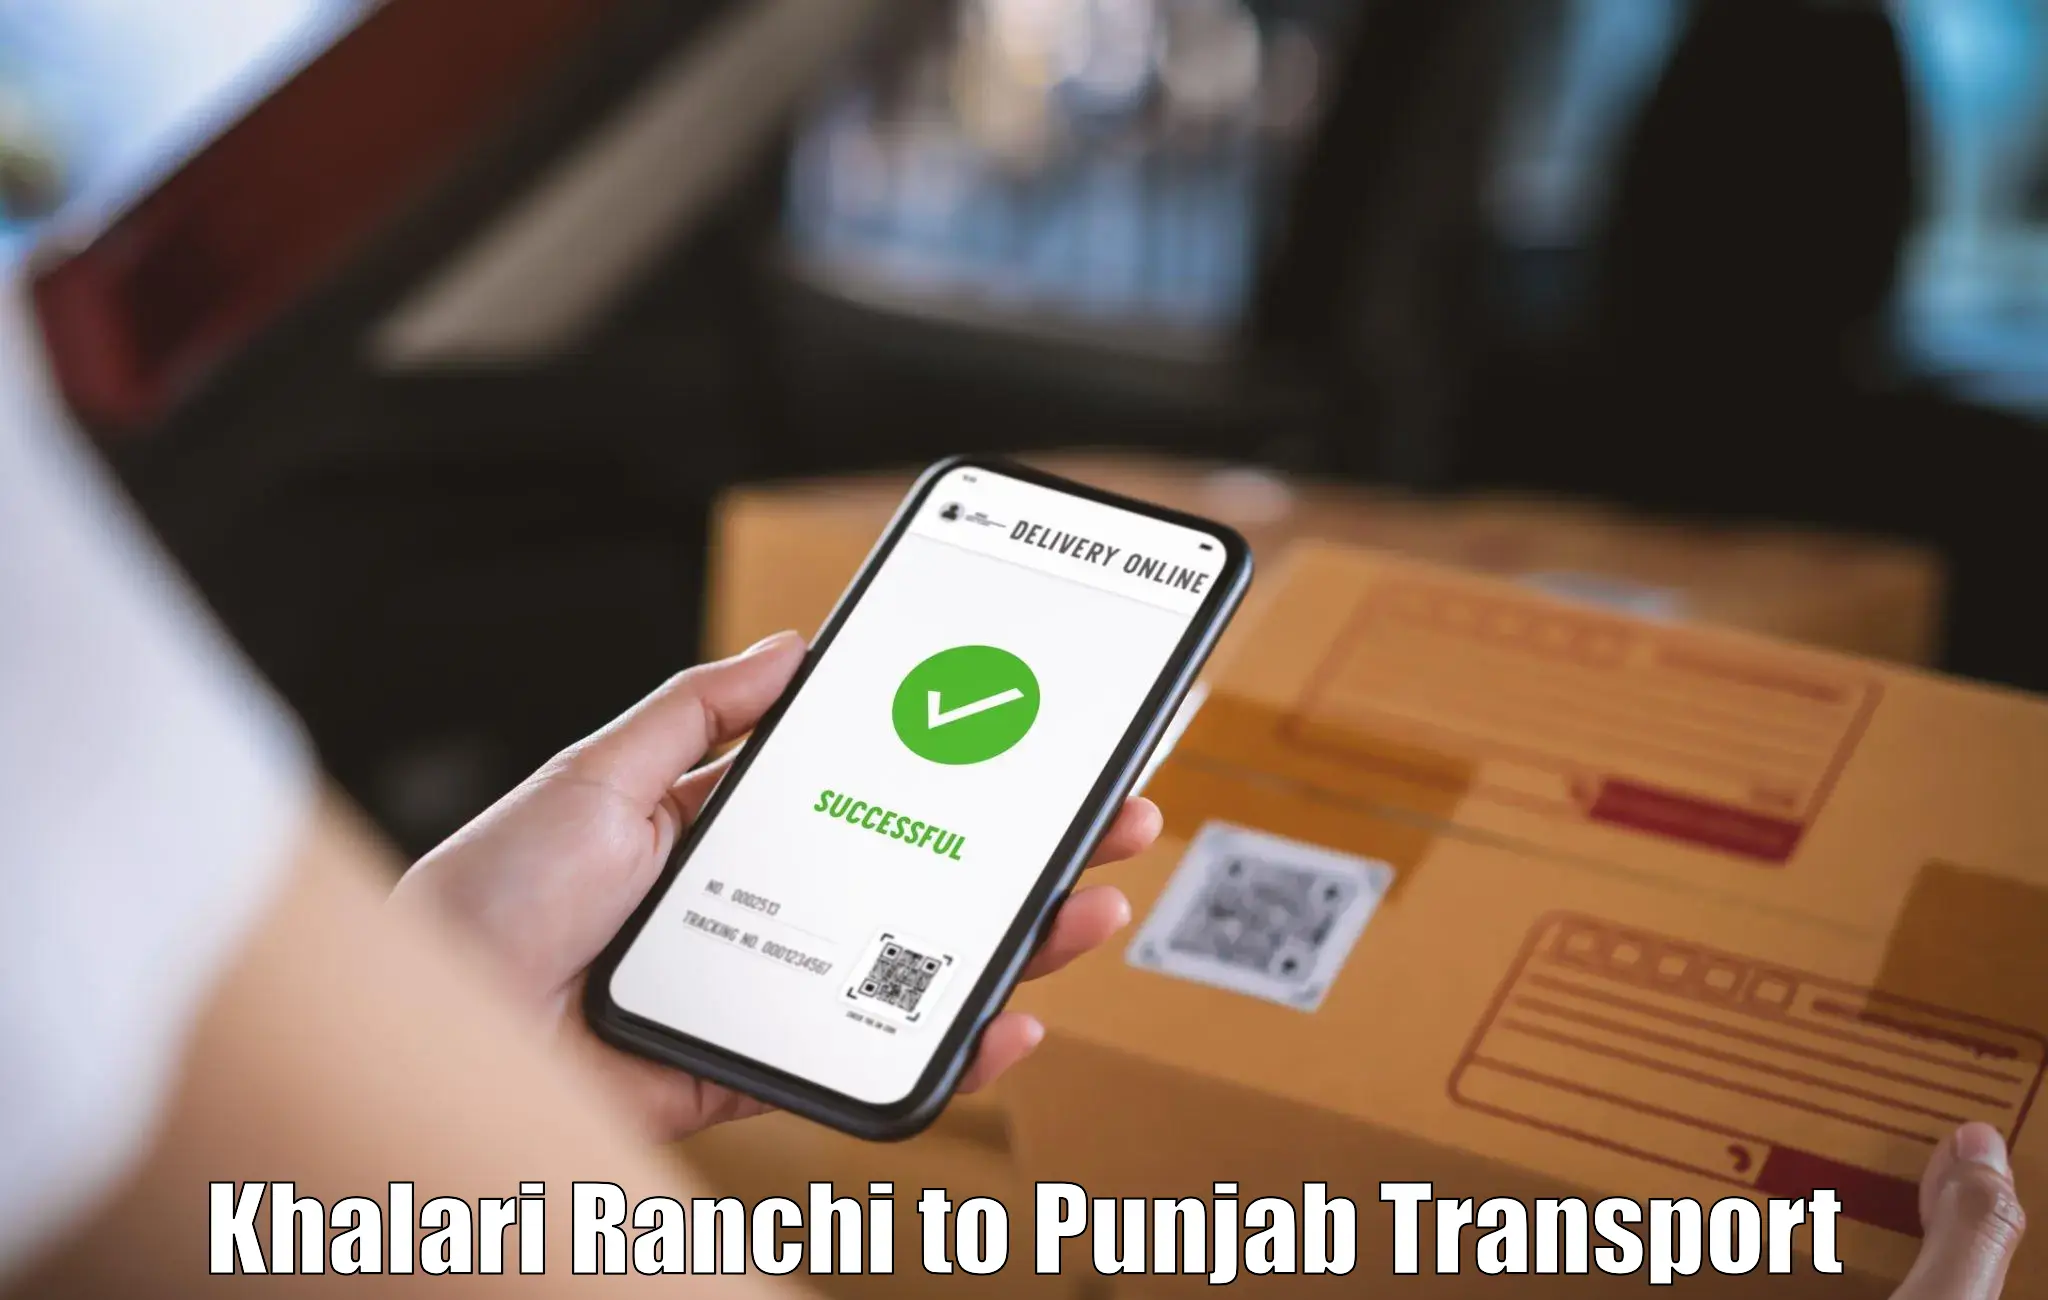 Delivery service Khalari Ranchi to Muktsar